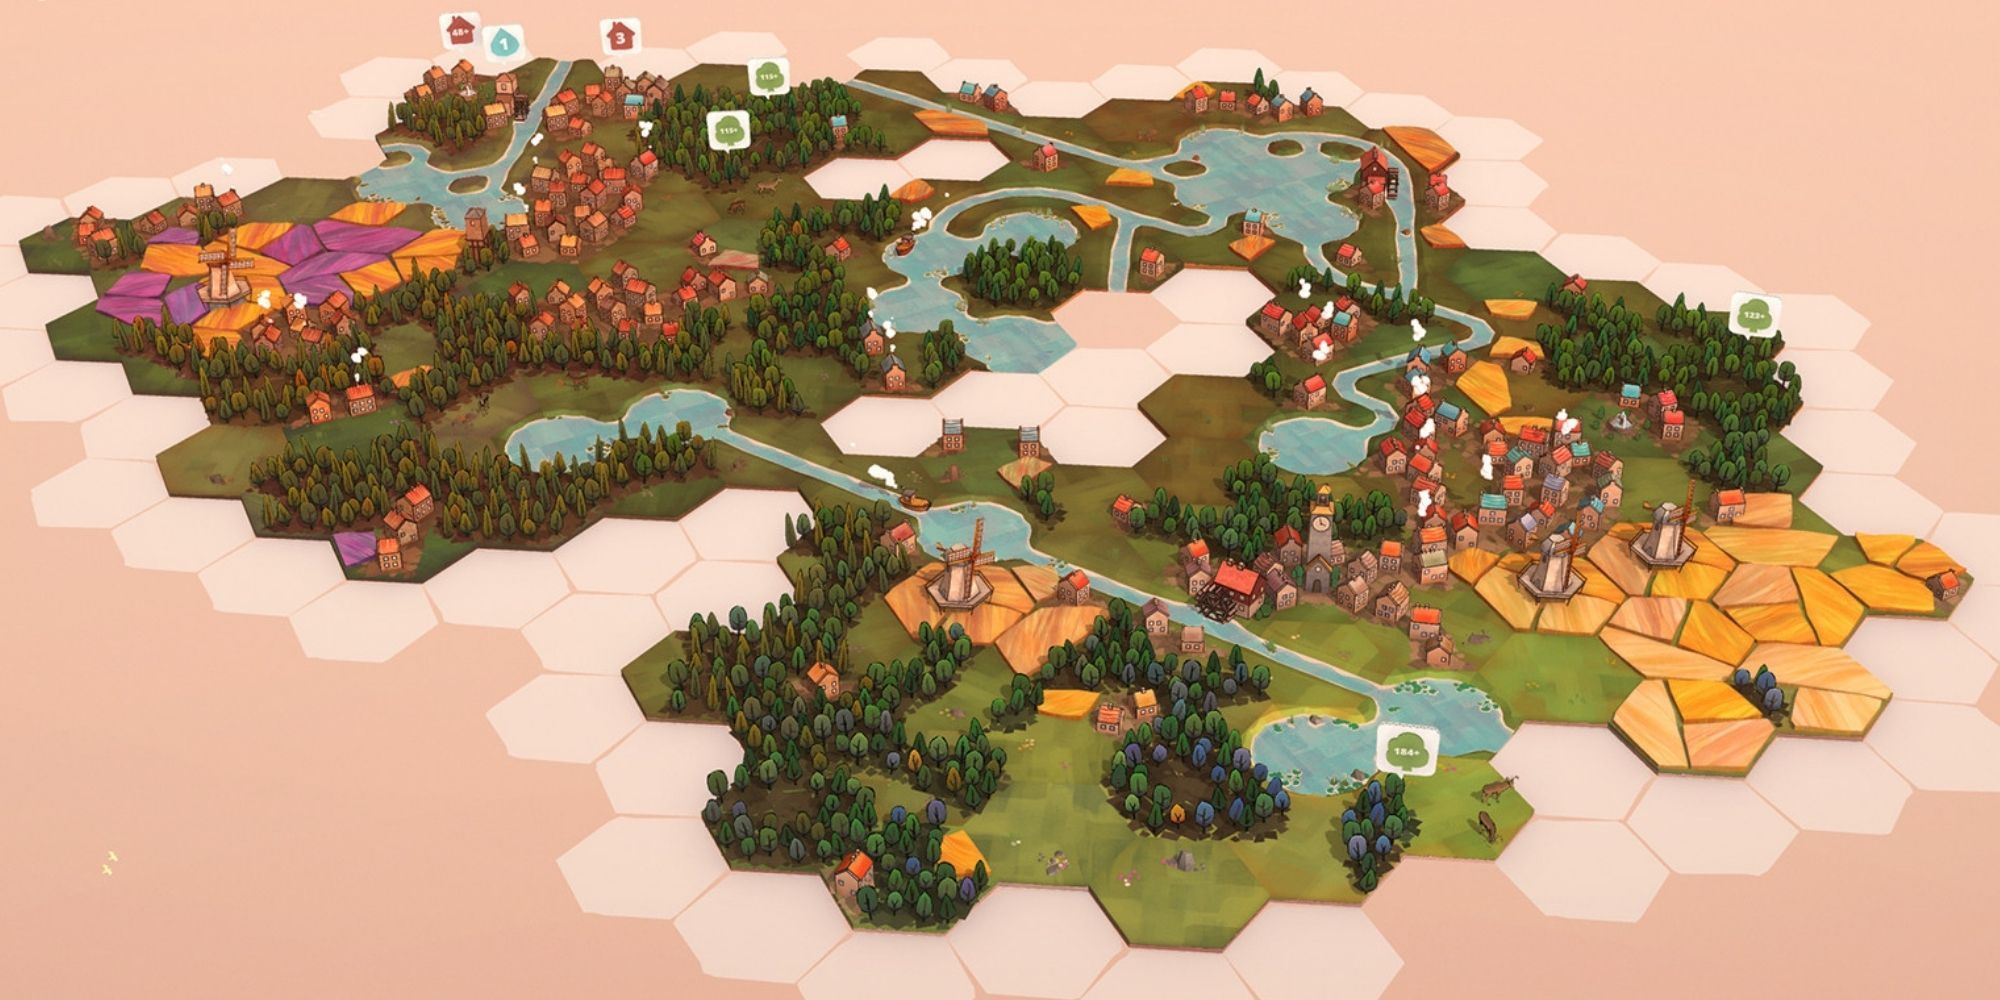 Dorfromantik in-game screenshot of player's board